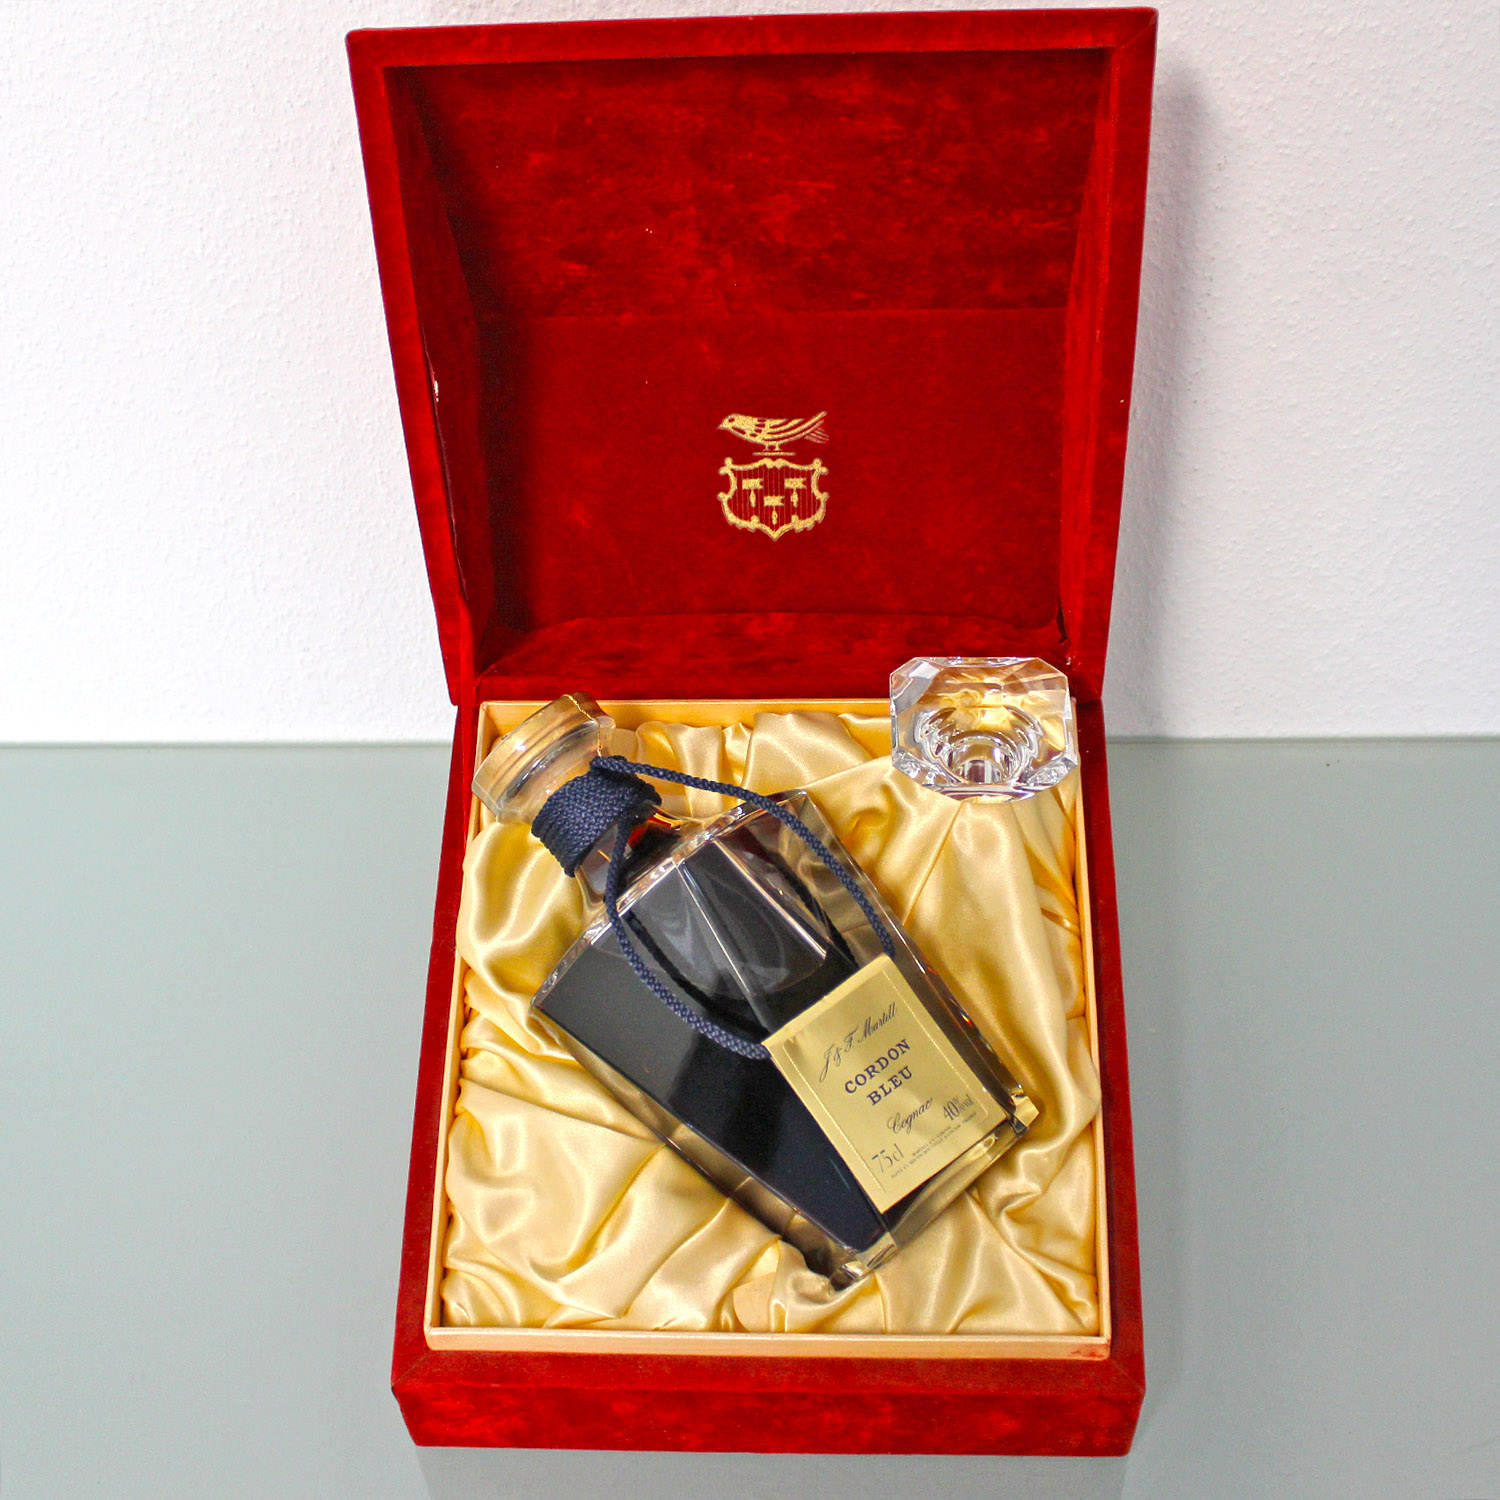 Martell Cordon Bleu 1970s Baccarat Crystal Decanter Cognac Box 1